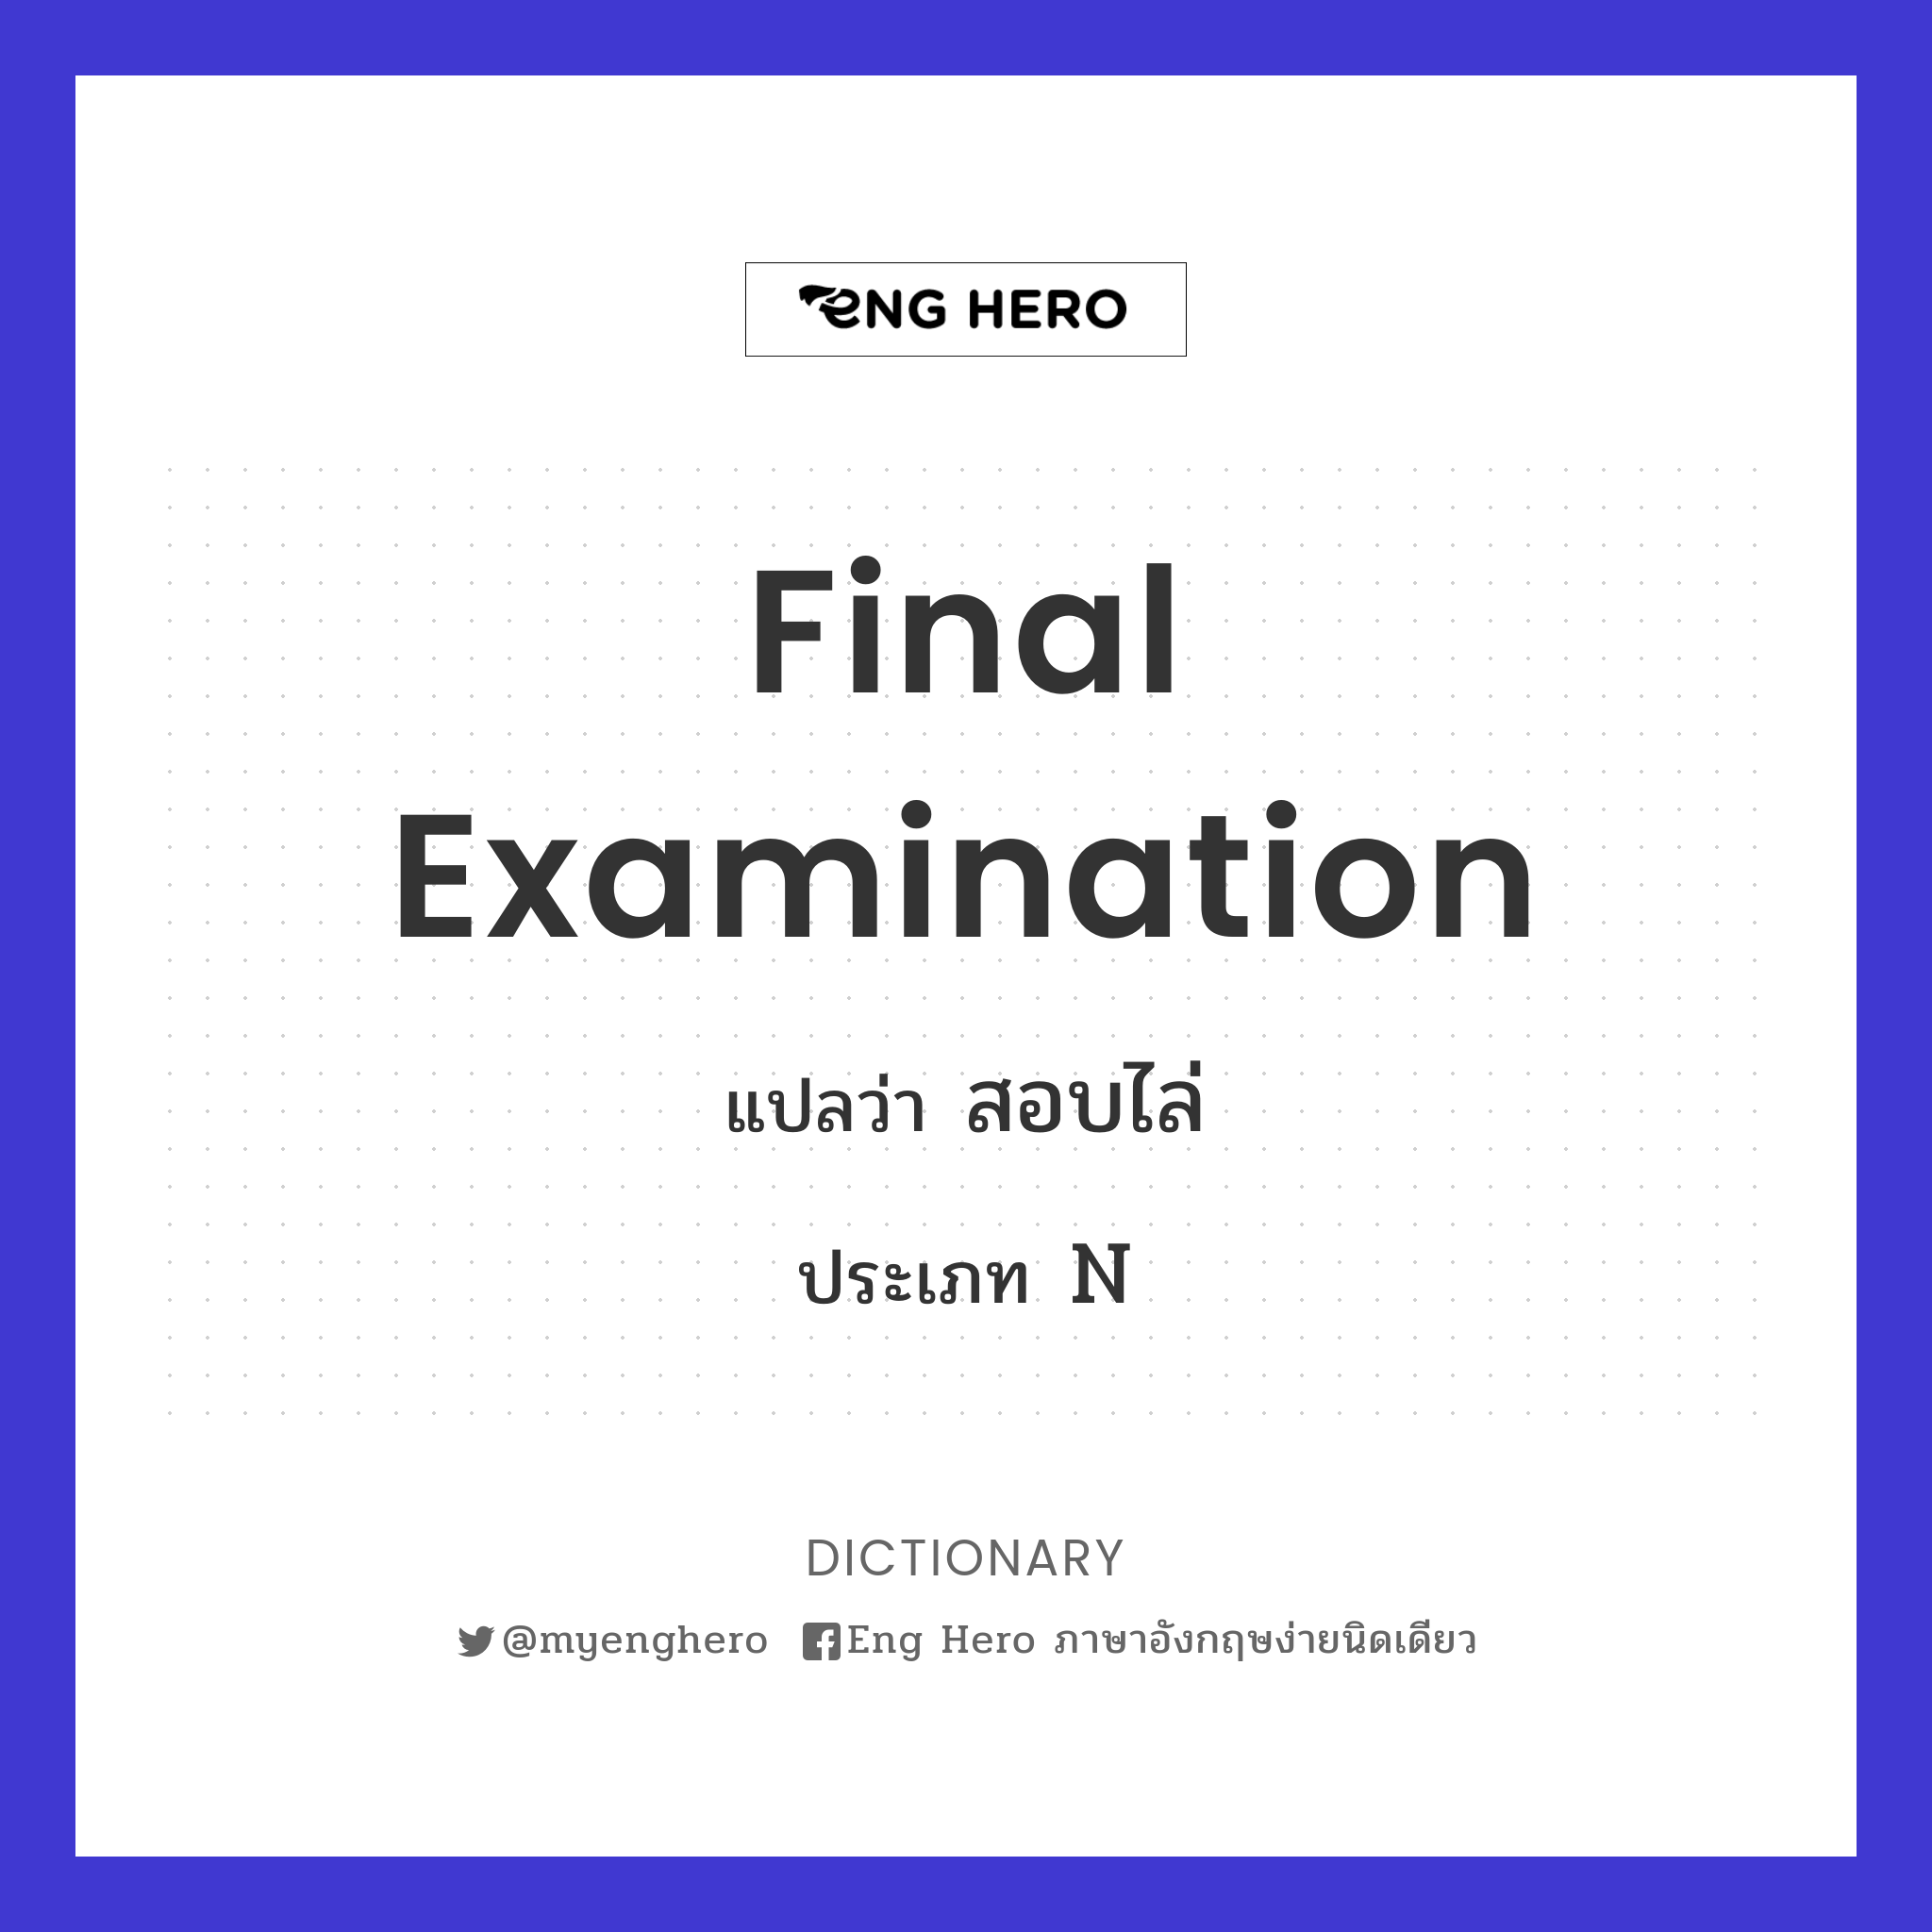 final examination